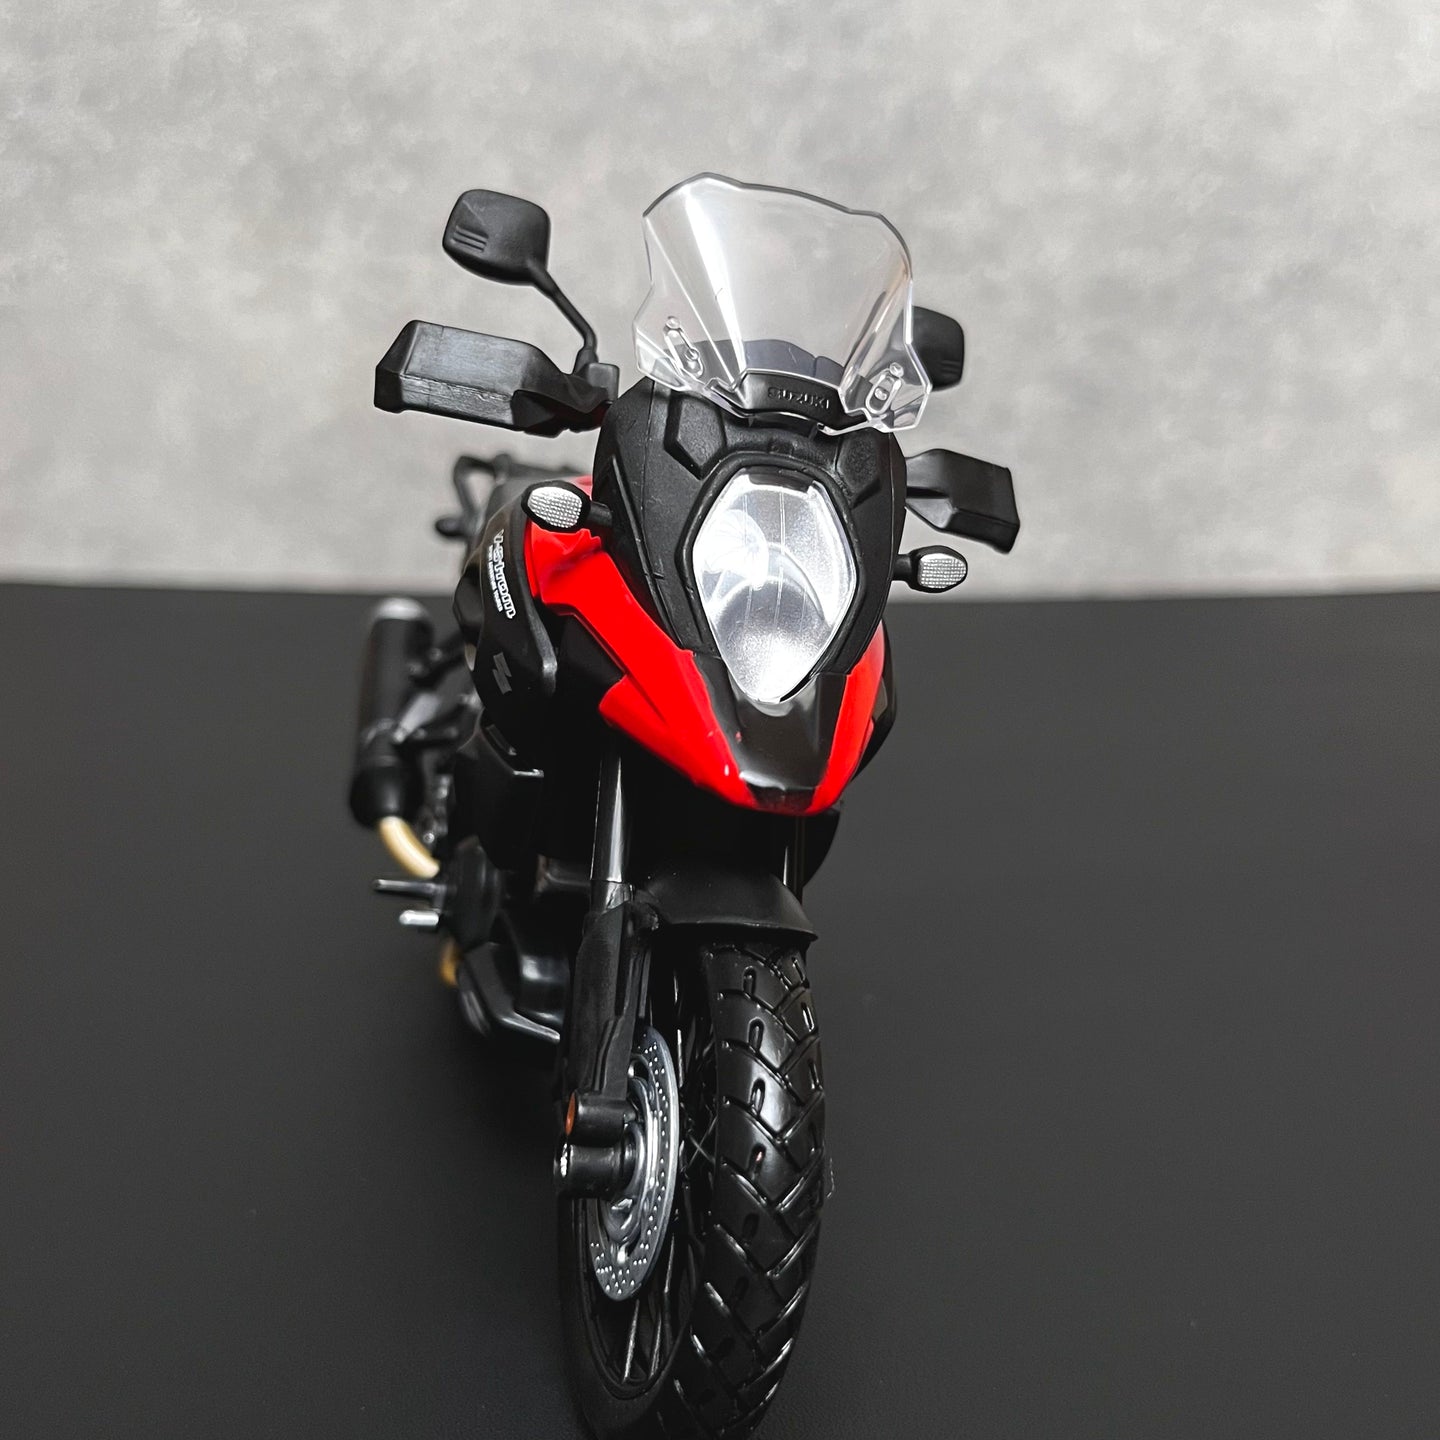 Suzuki V-Storm Diecast Bike 1:12 Motorcycle Model By Maisto